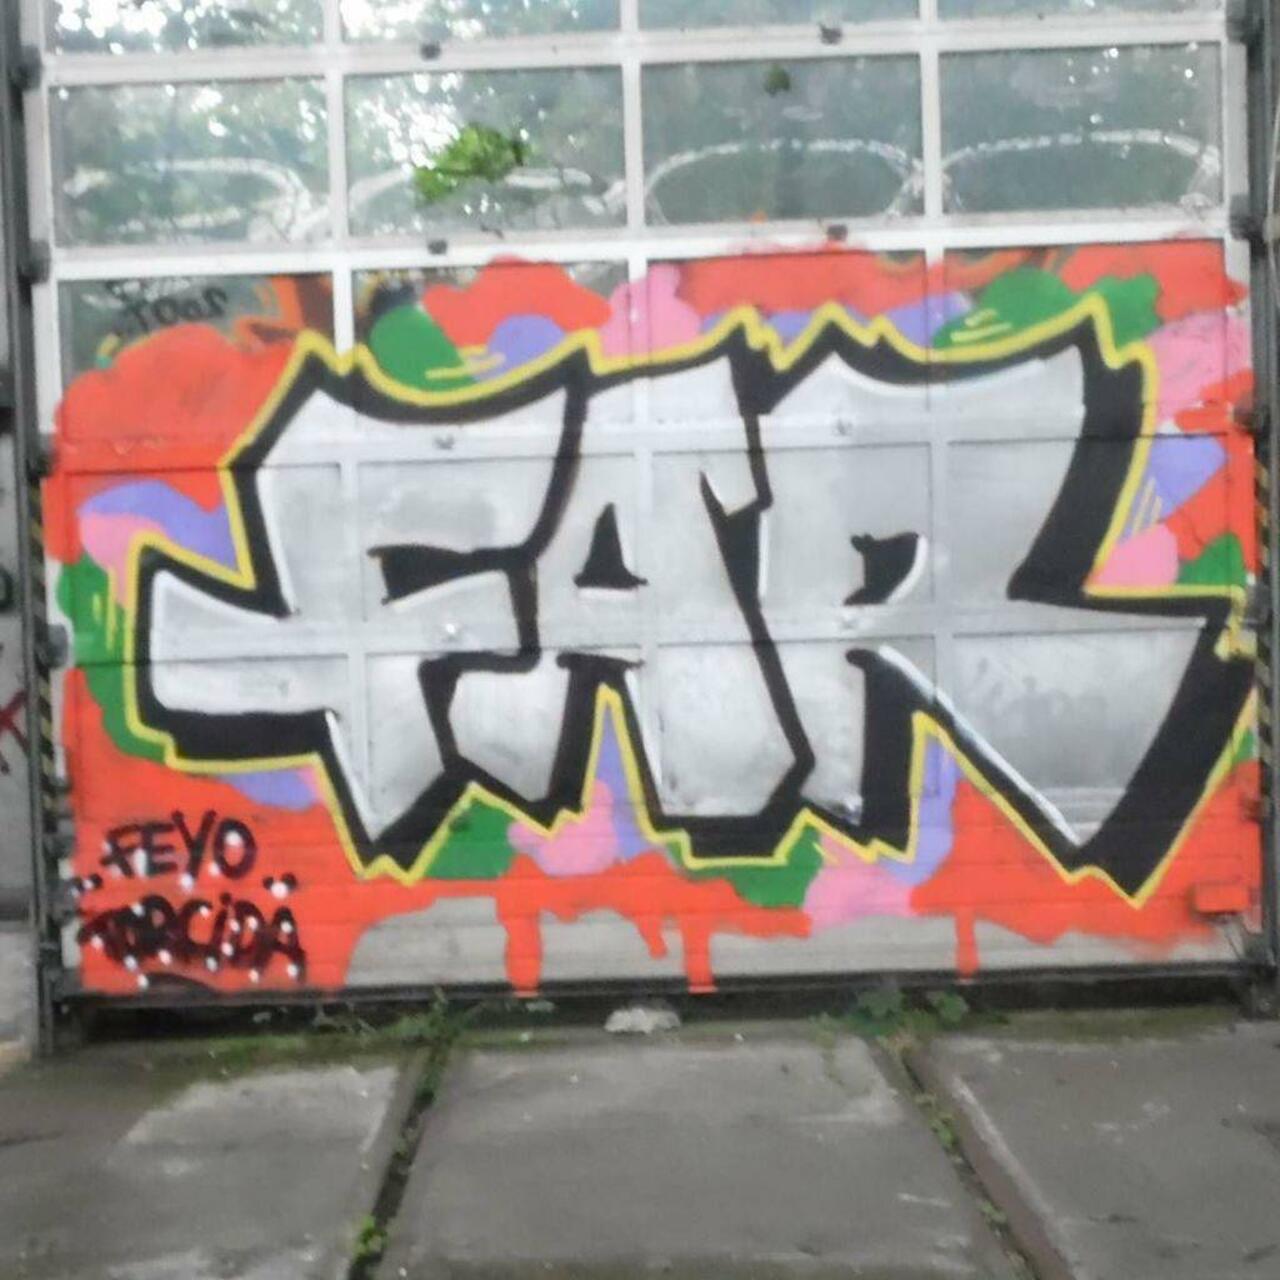 RT @artpushr: via #graffiti.duisburg "http://bit.ly/1M3Xbr4" #graffiti #streetart http://t.co/tcVqvyWKbj